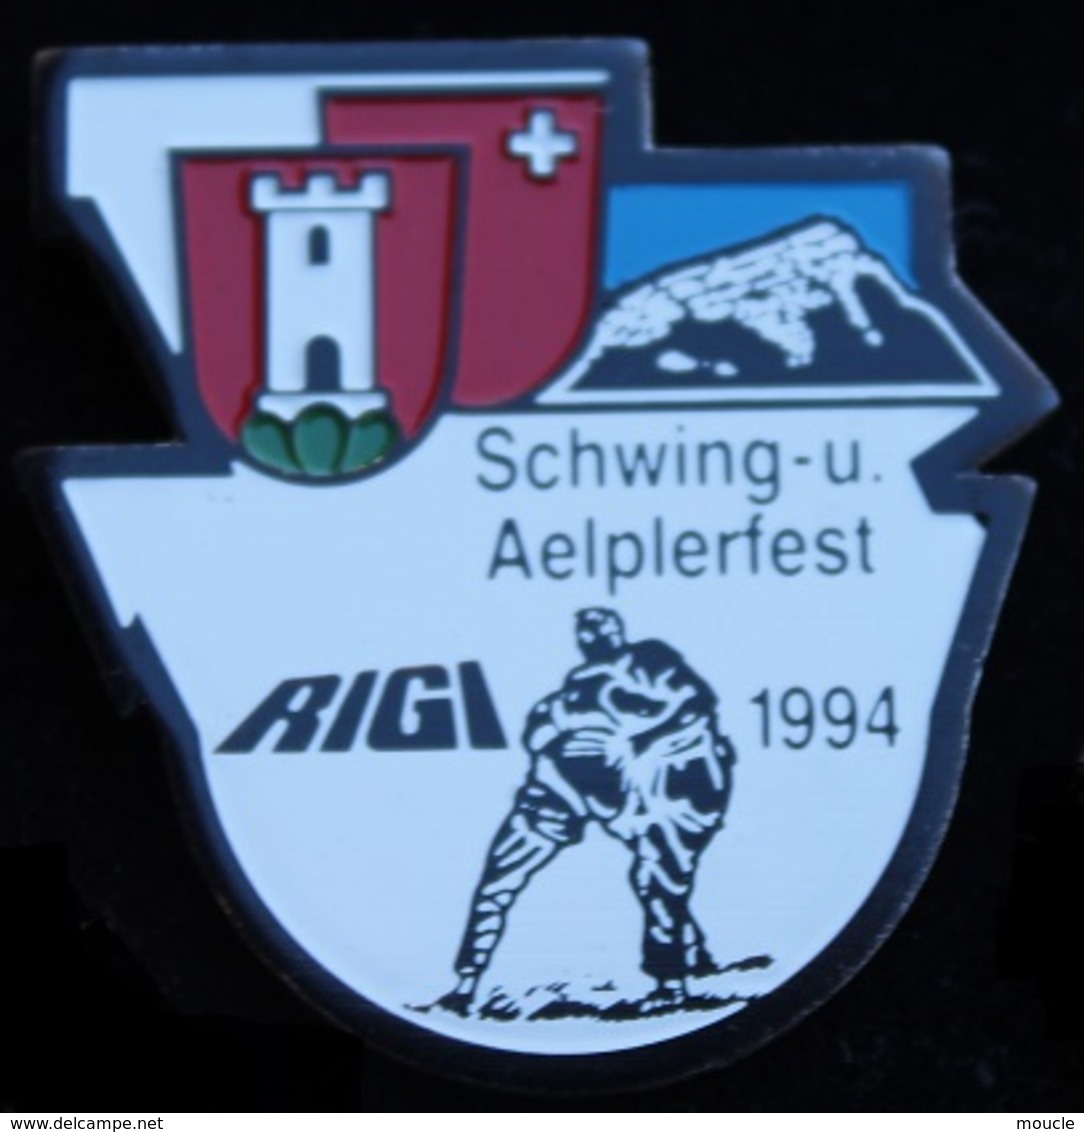 LUTTE SUISSE - LUTTEURS - SCHWING-U. - AELPERFEST - RIGI - 1994 - URI - SCHWEIZ - SWISS - SWITZERLAND -    (21) - Ringen